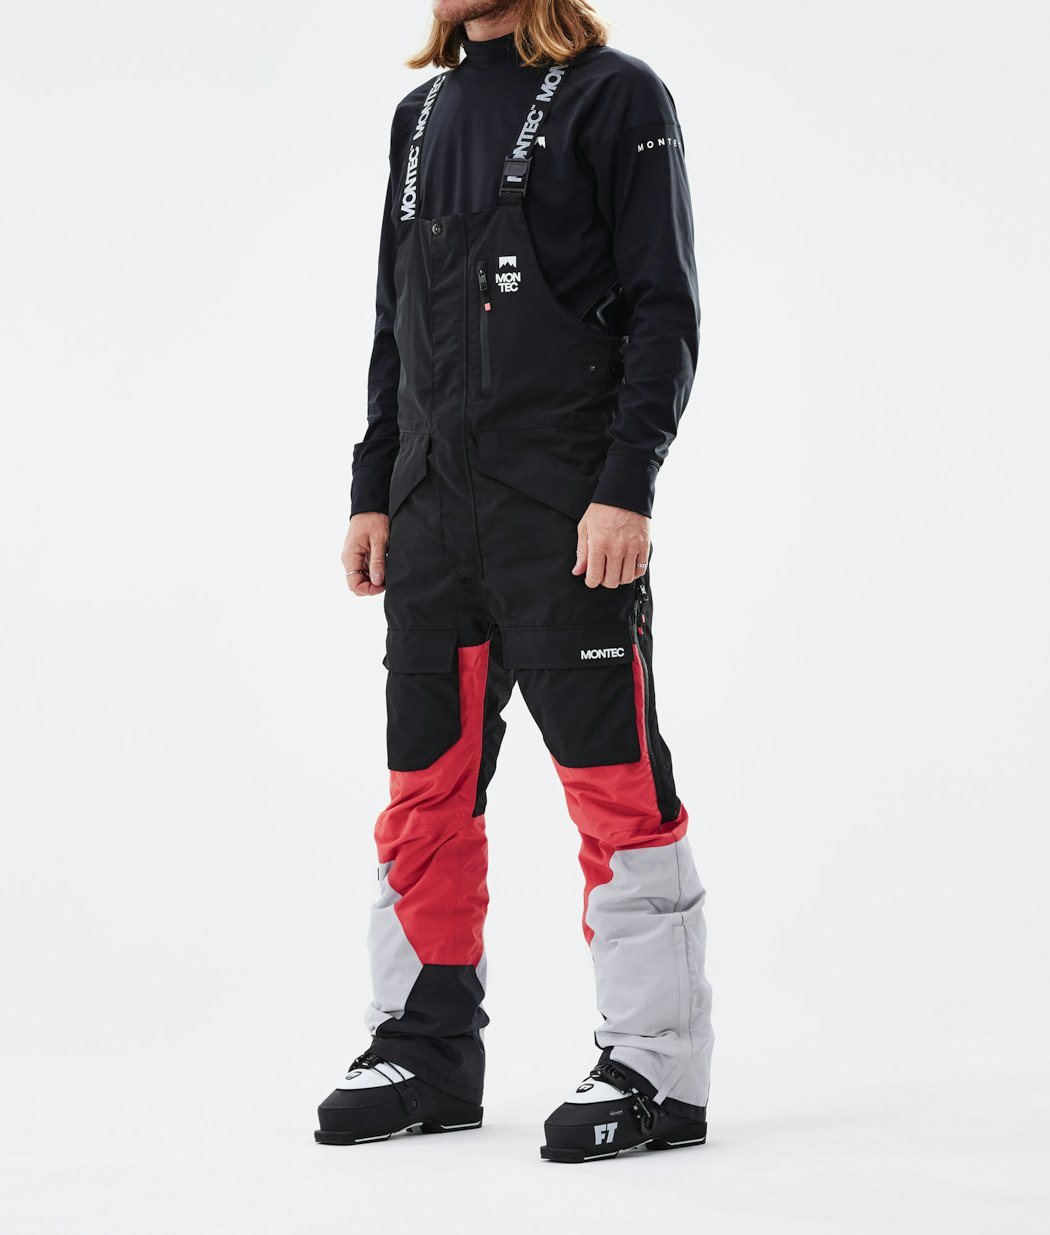 Fawk 2021 Ski Pants Men Black/Coral/LightGrey